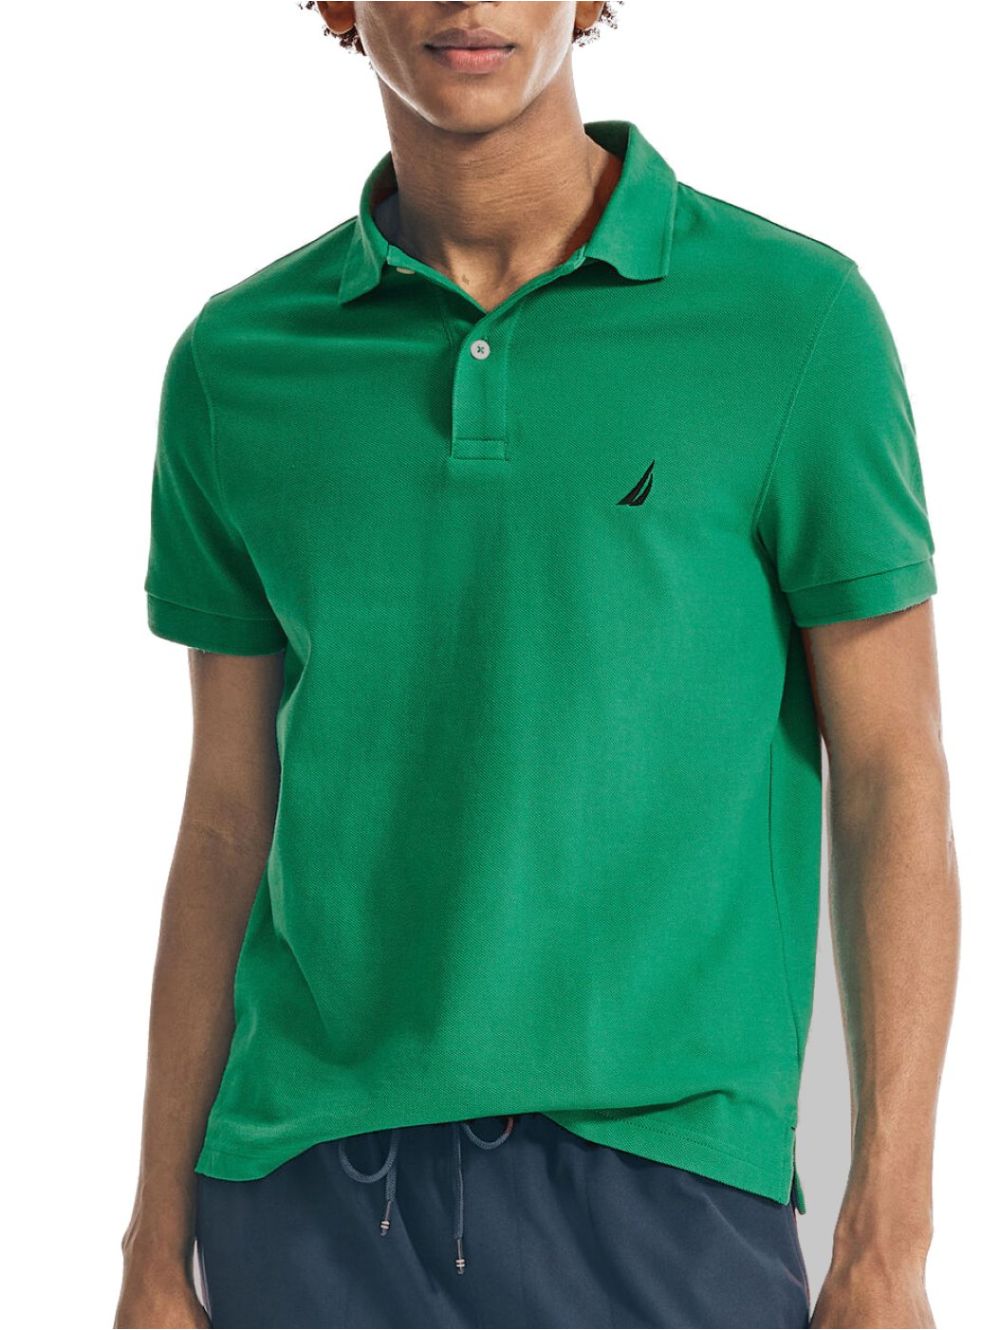 https://www.toptenfashion.gr/47570-thickbox_default/nautica-men-s-green-short-sleeve-pique-polo-shirt-k17000-3px.jpg